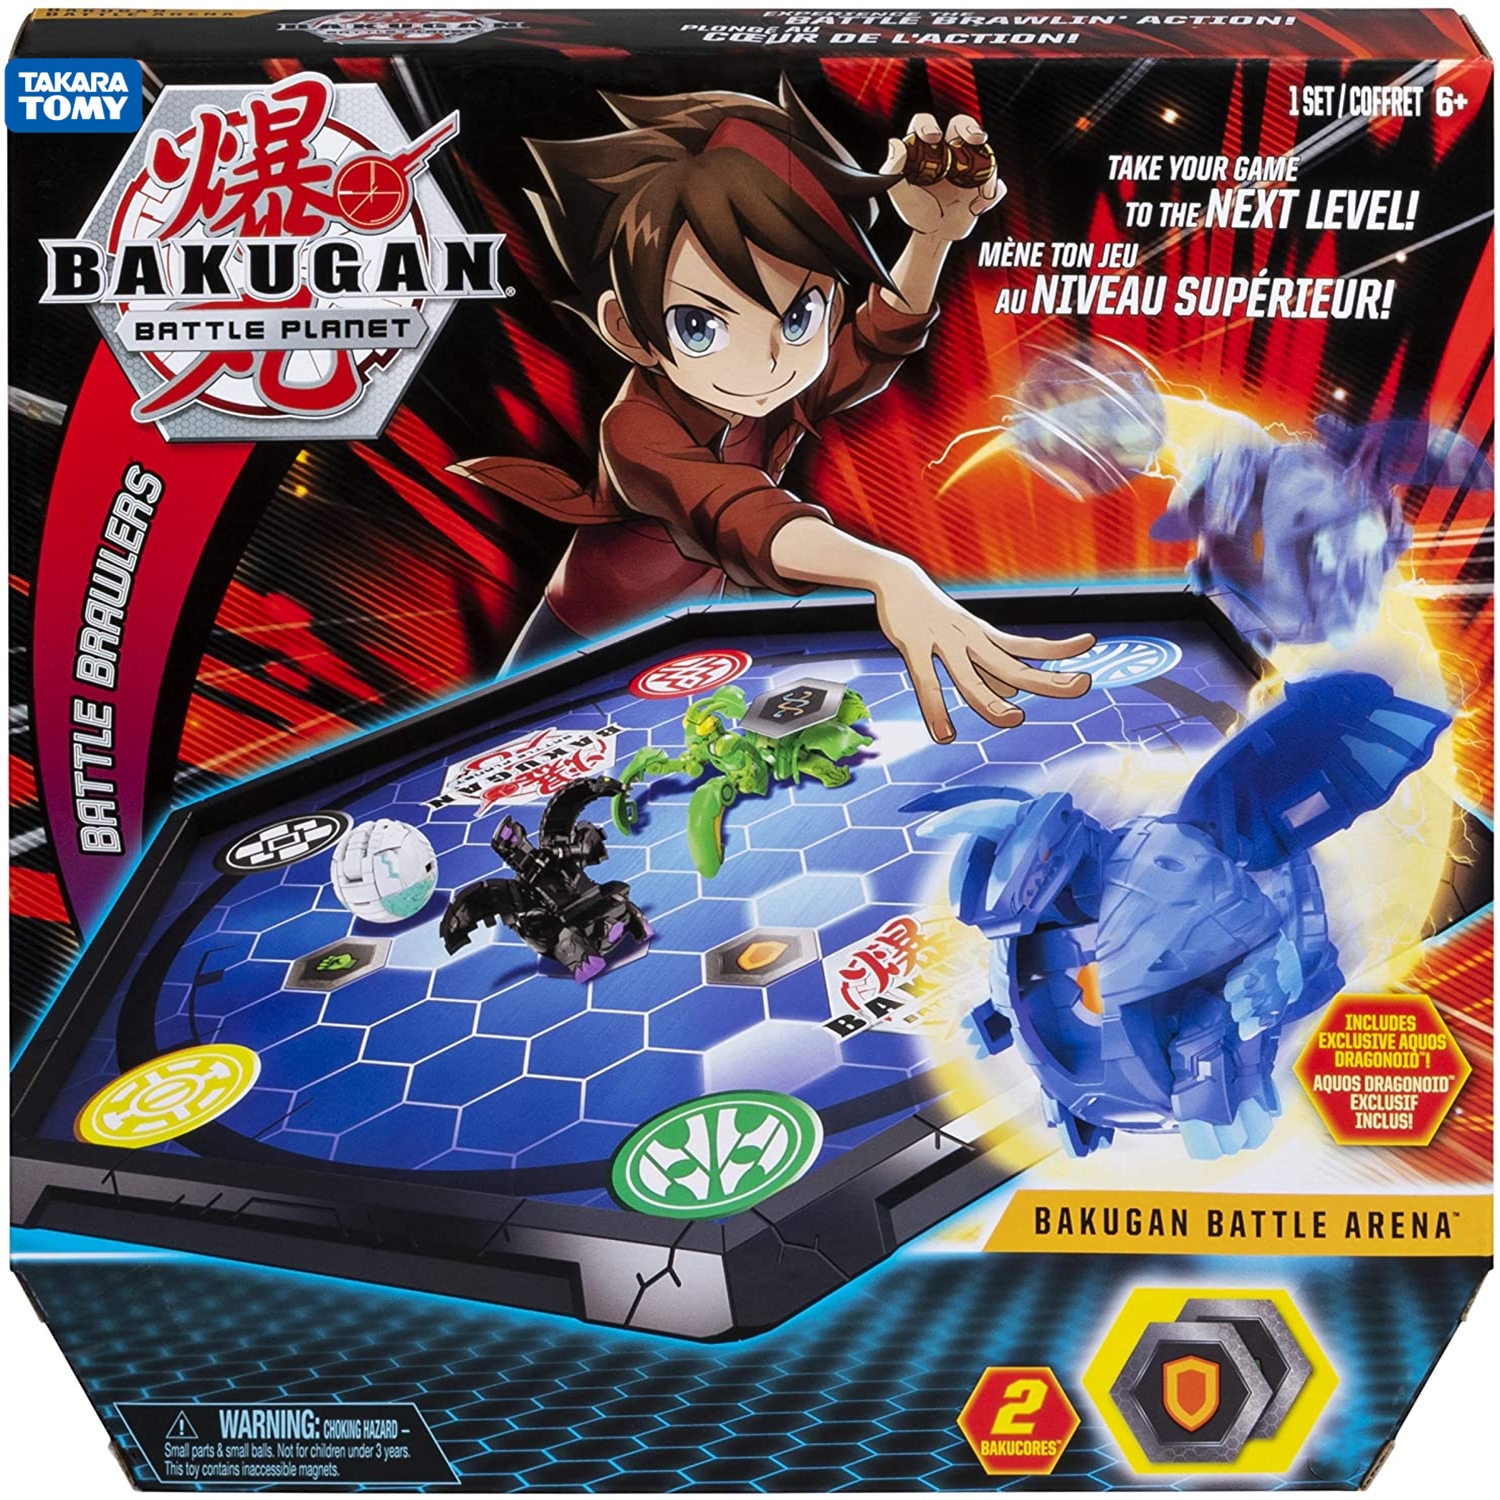 TAKARA-TOMY-Bakugan-Battle-Arena-Game-Board-Collectibles-Exclusive-Bakugan-BakuCores-Ability-Card-Kid-Toys.jpg